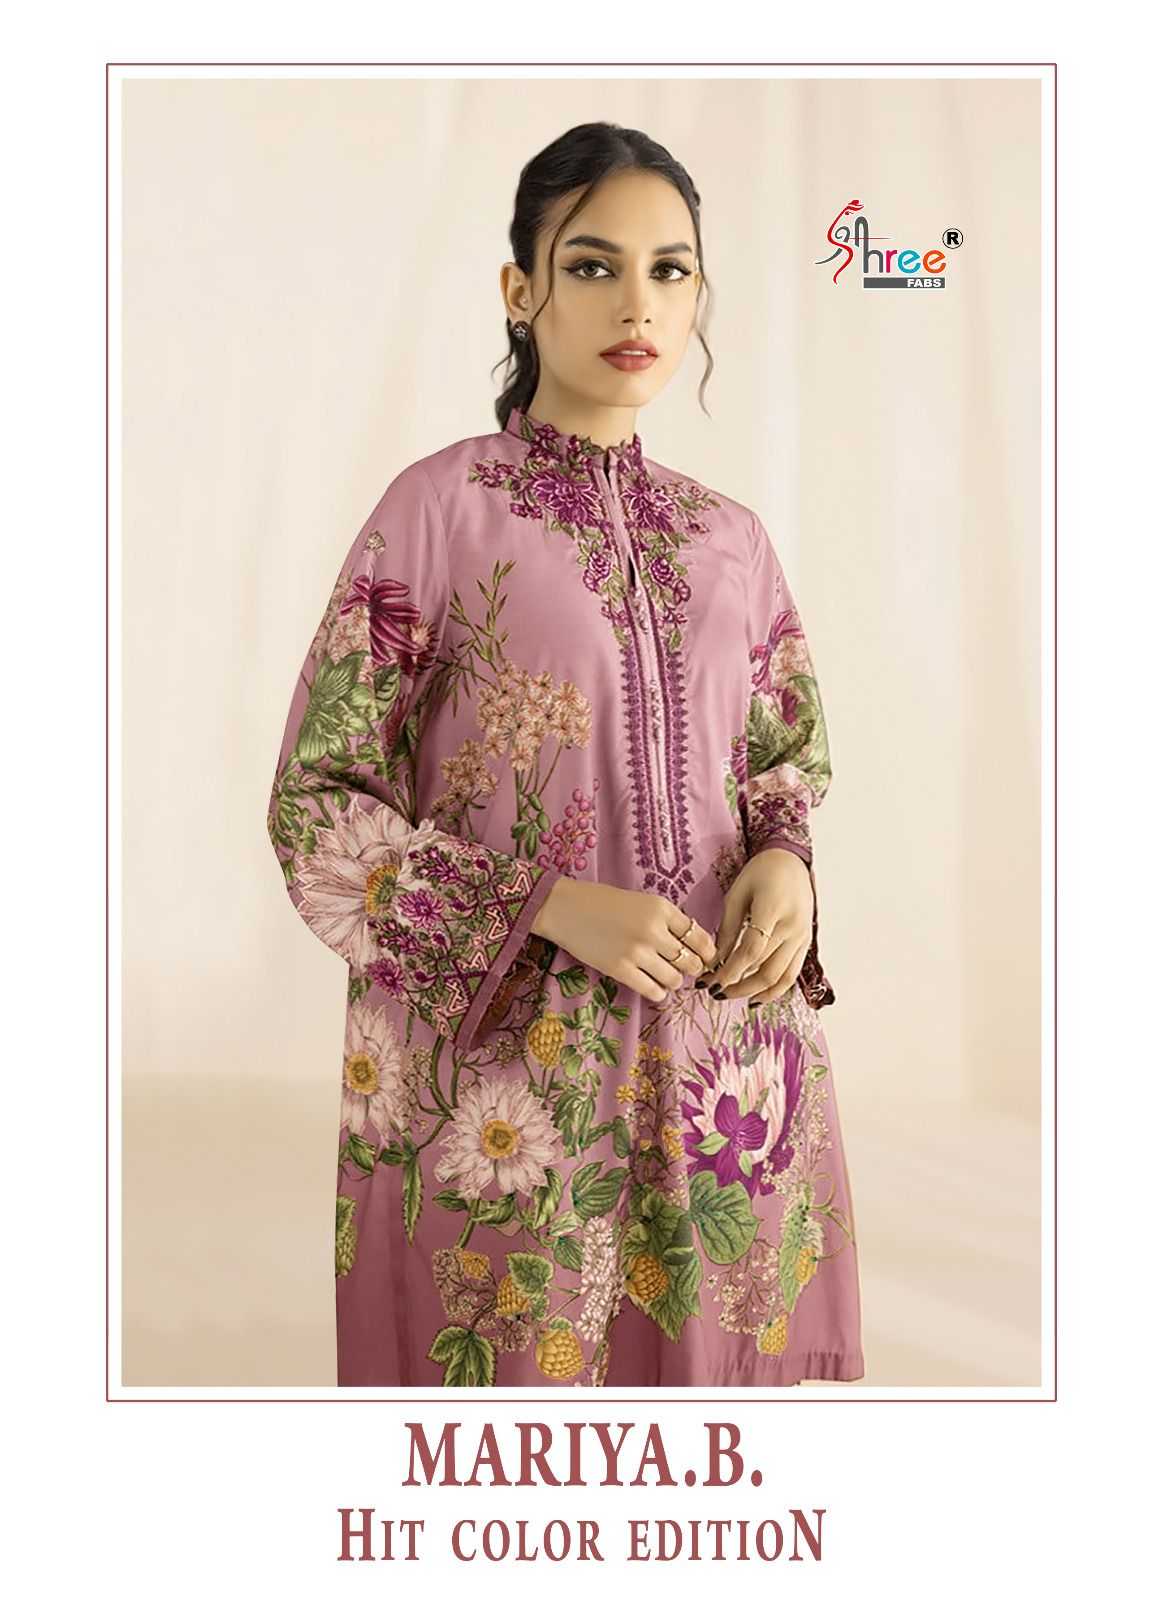 shree fab mariya b hit color edition 3331 pakistani unstitch suit beautiful collection